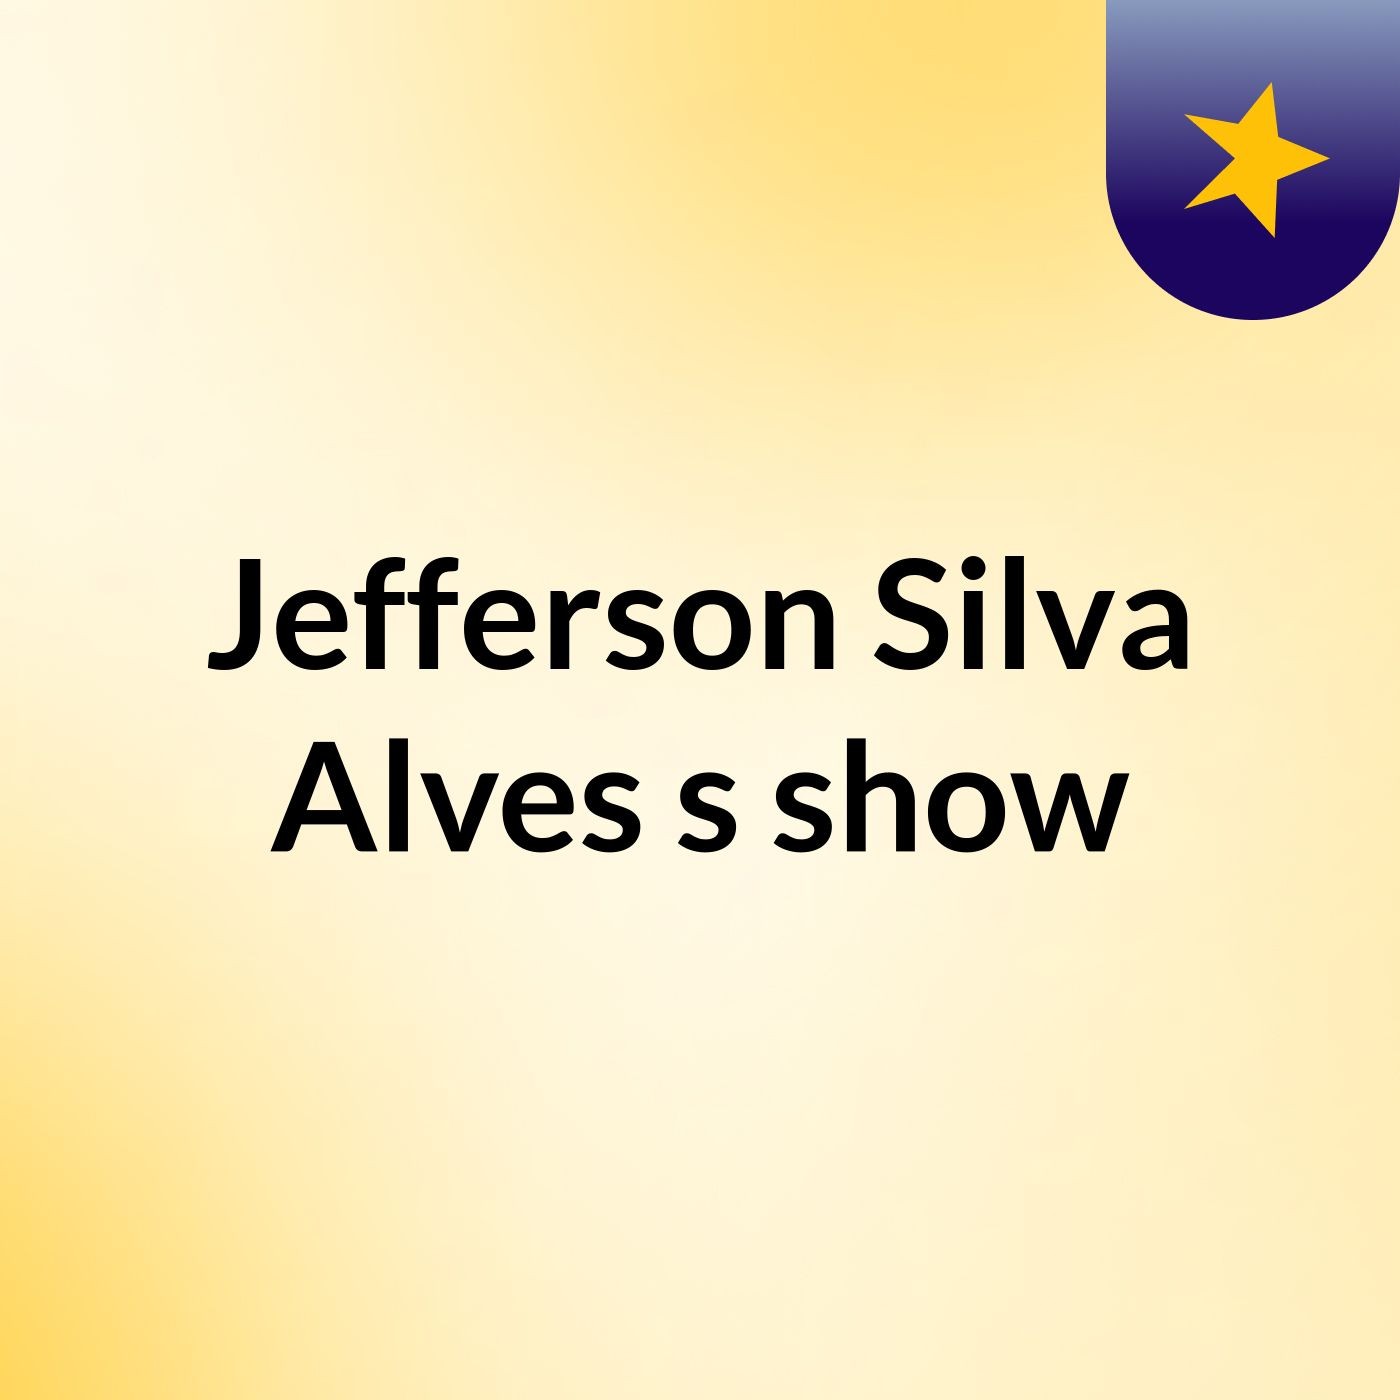 Jefferson Silva Alves's show